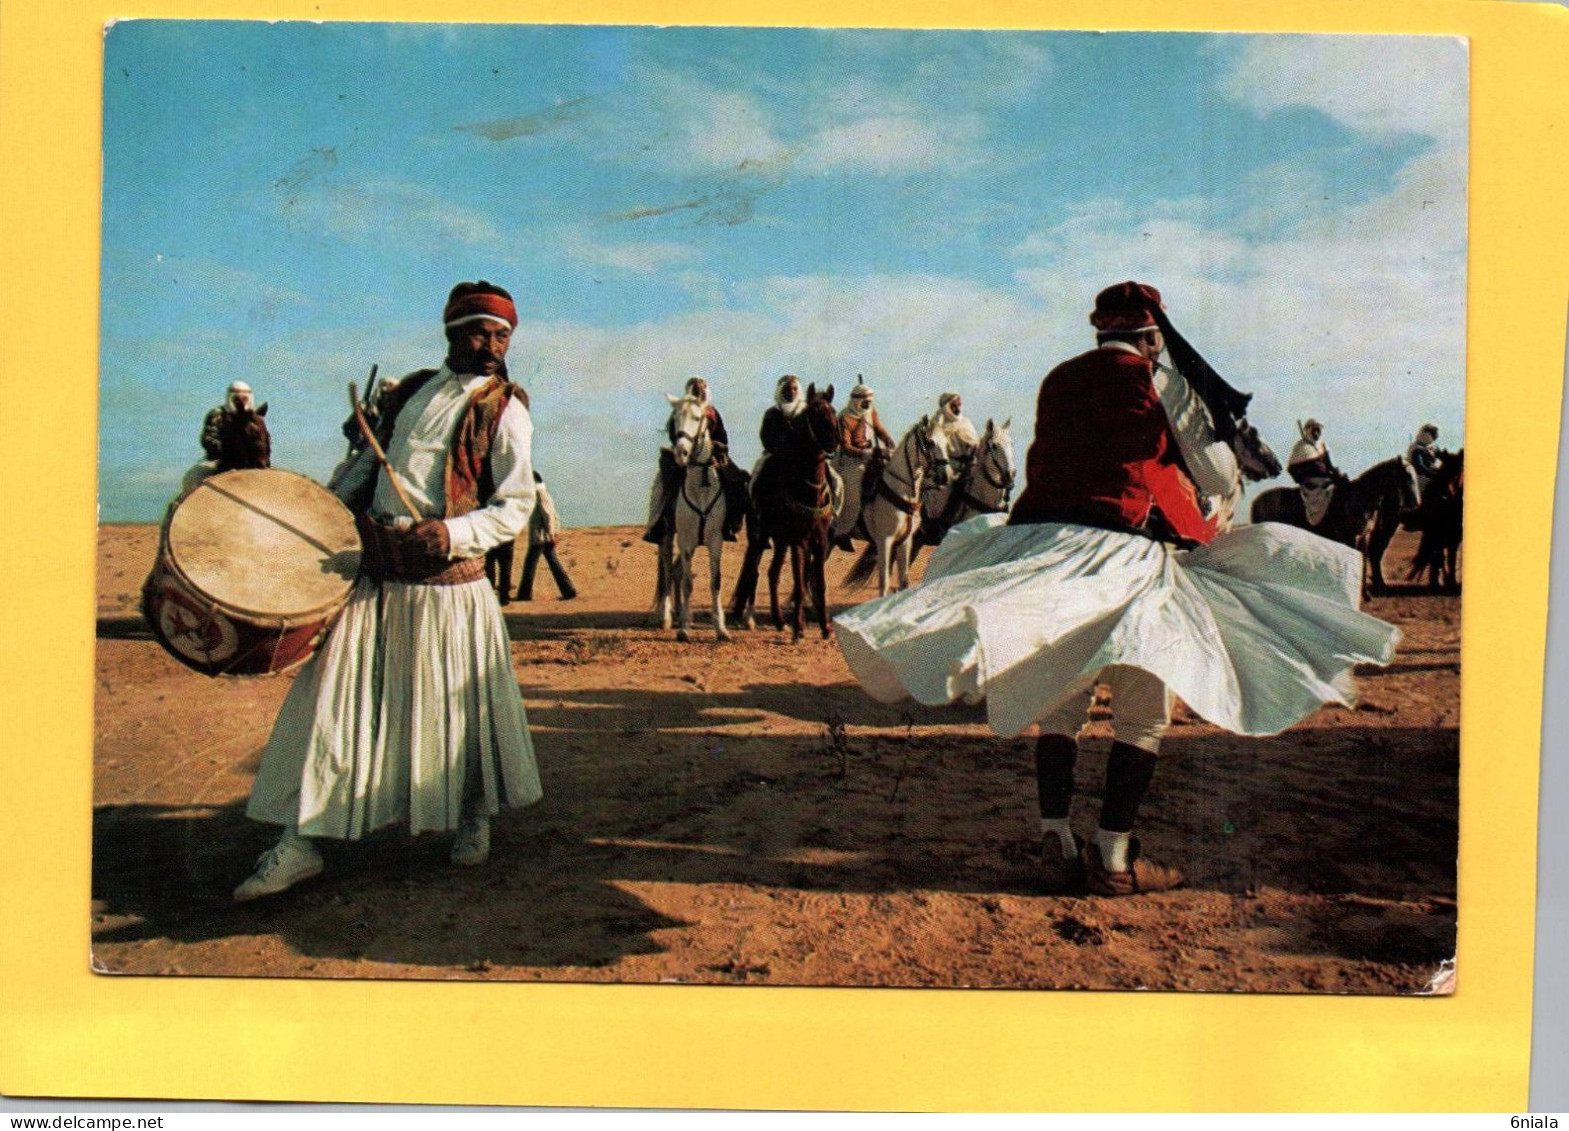 Sud Tunisien Danseur Et Musicien  ( 21647 ) - Tunisie